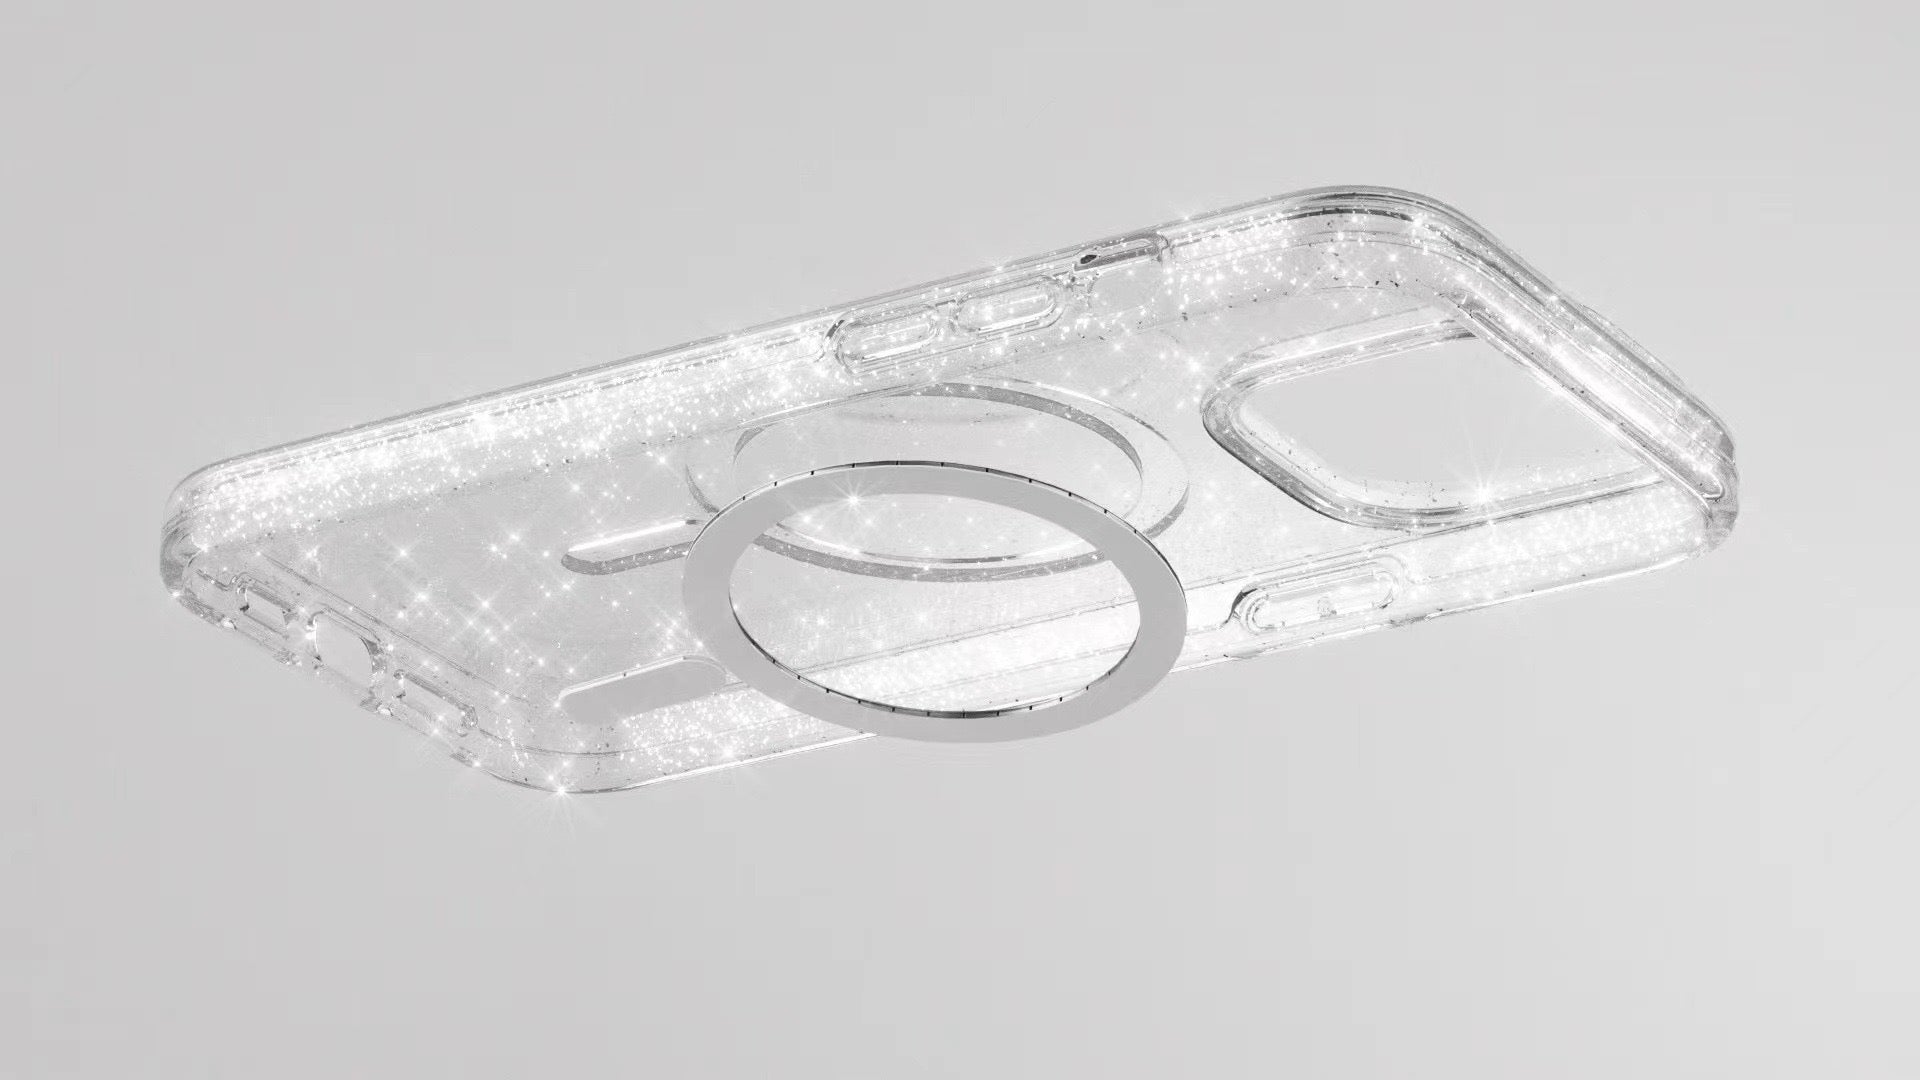 iPhone 11 Pro Terminator Magsafe Glitters Hard Clear Case